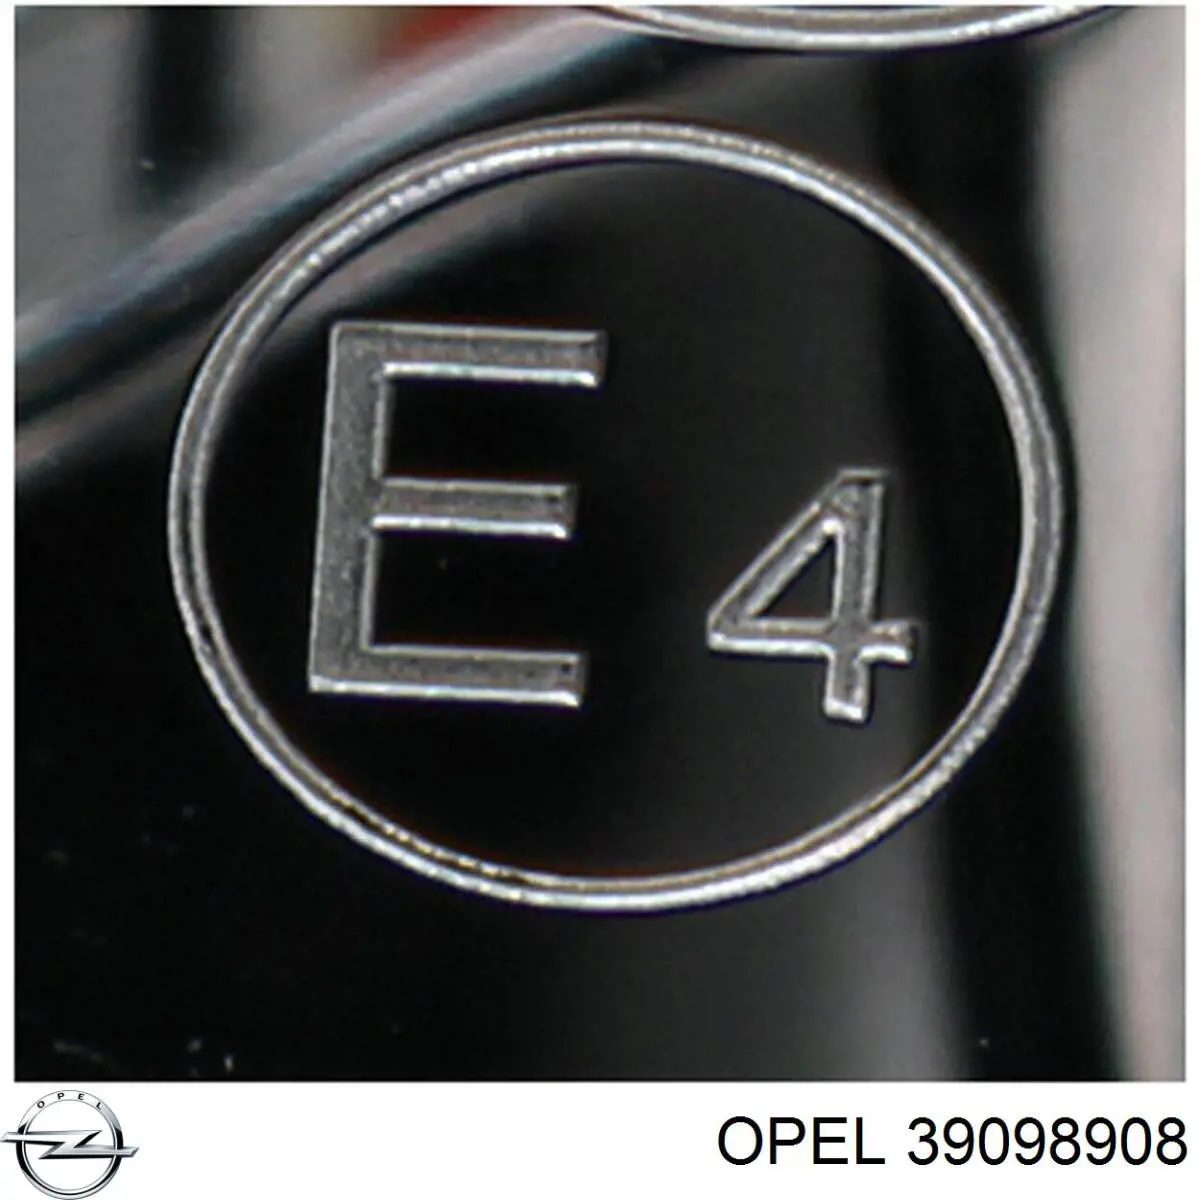 39098908 Opel фара противотуманная правая